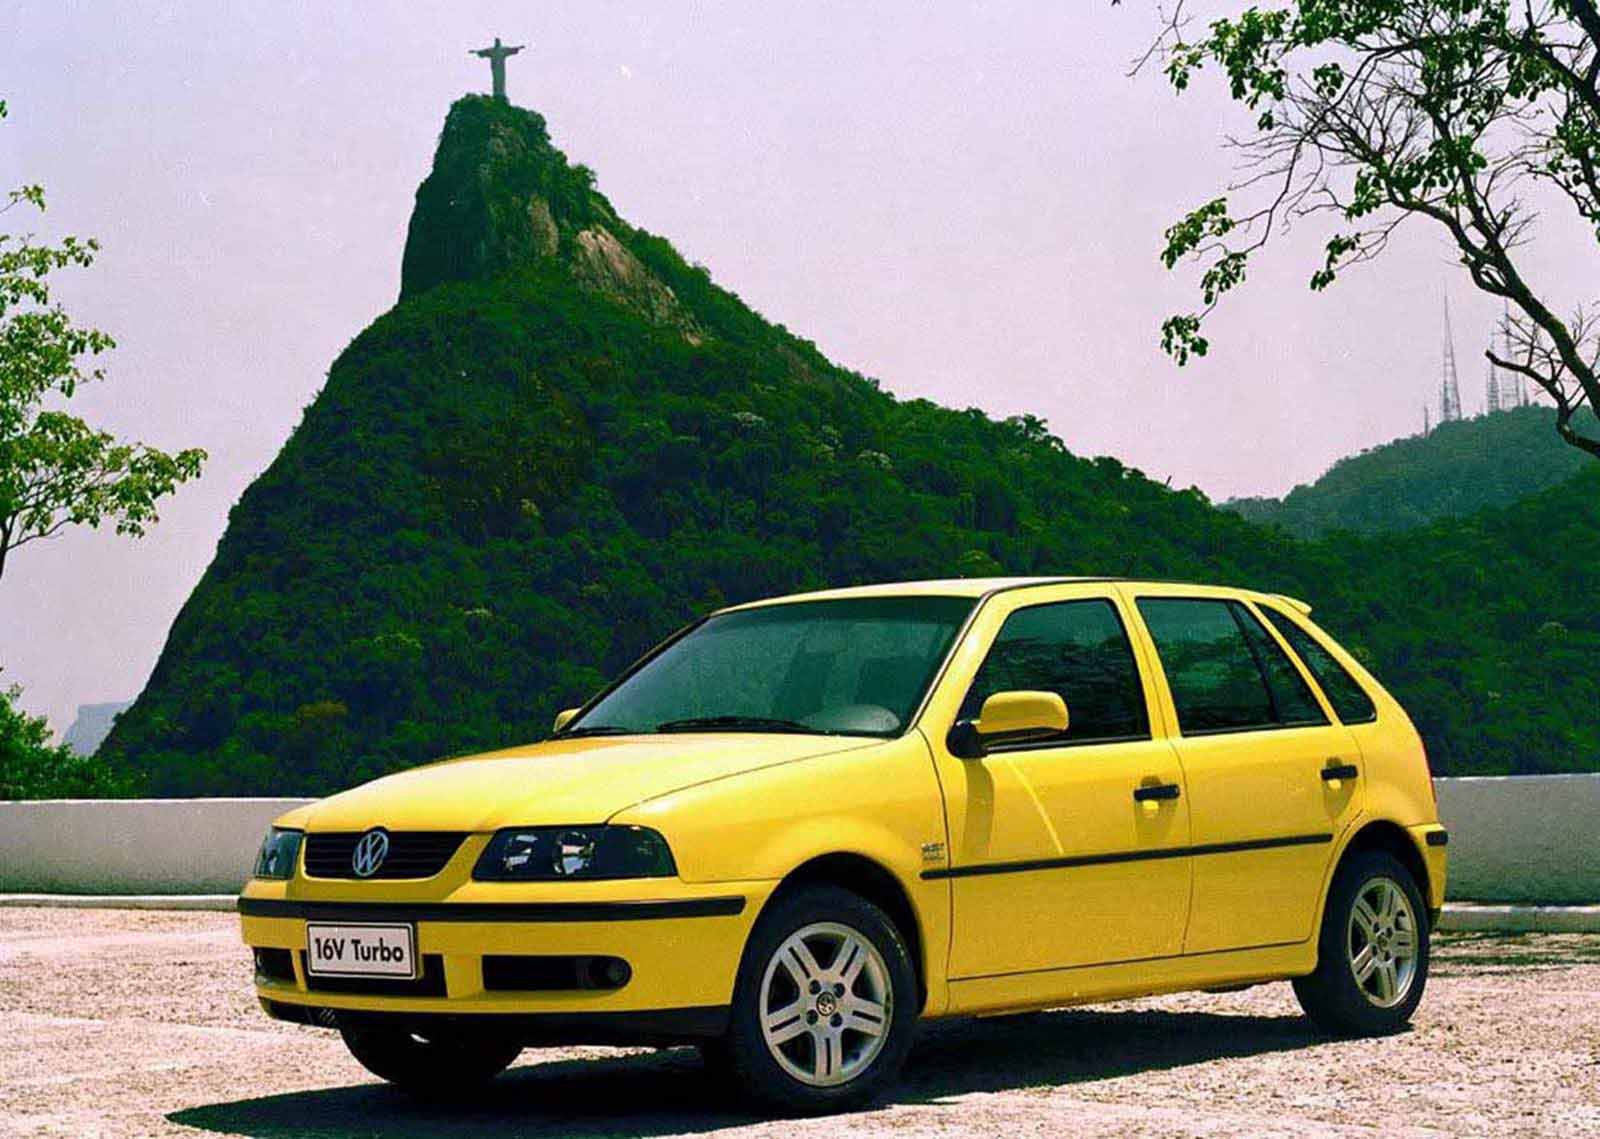 VW Gol Turbo 2001 (foto: divulgação VW)